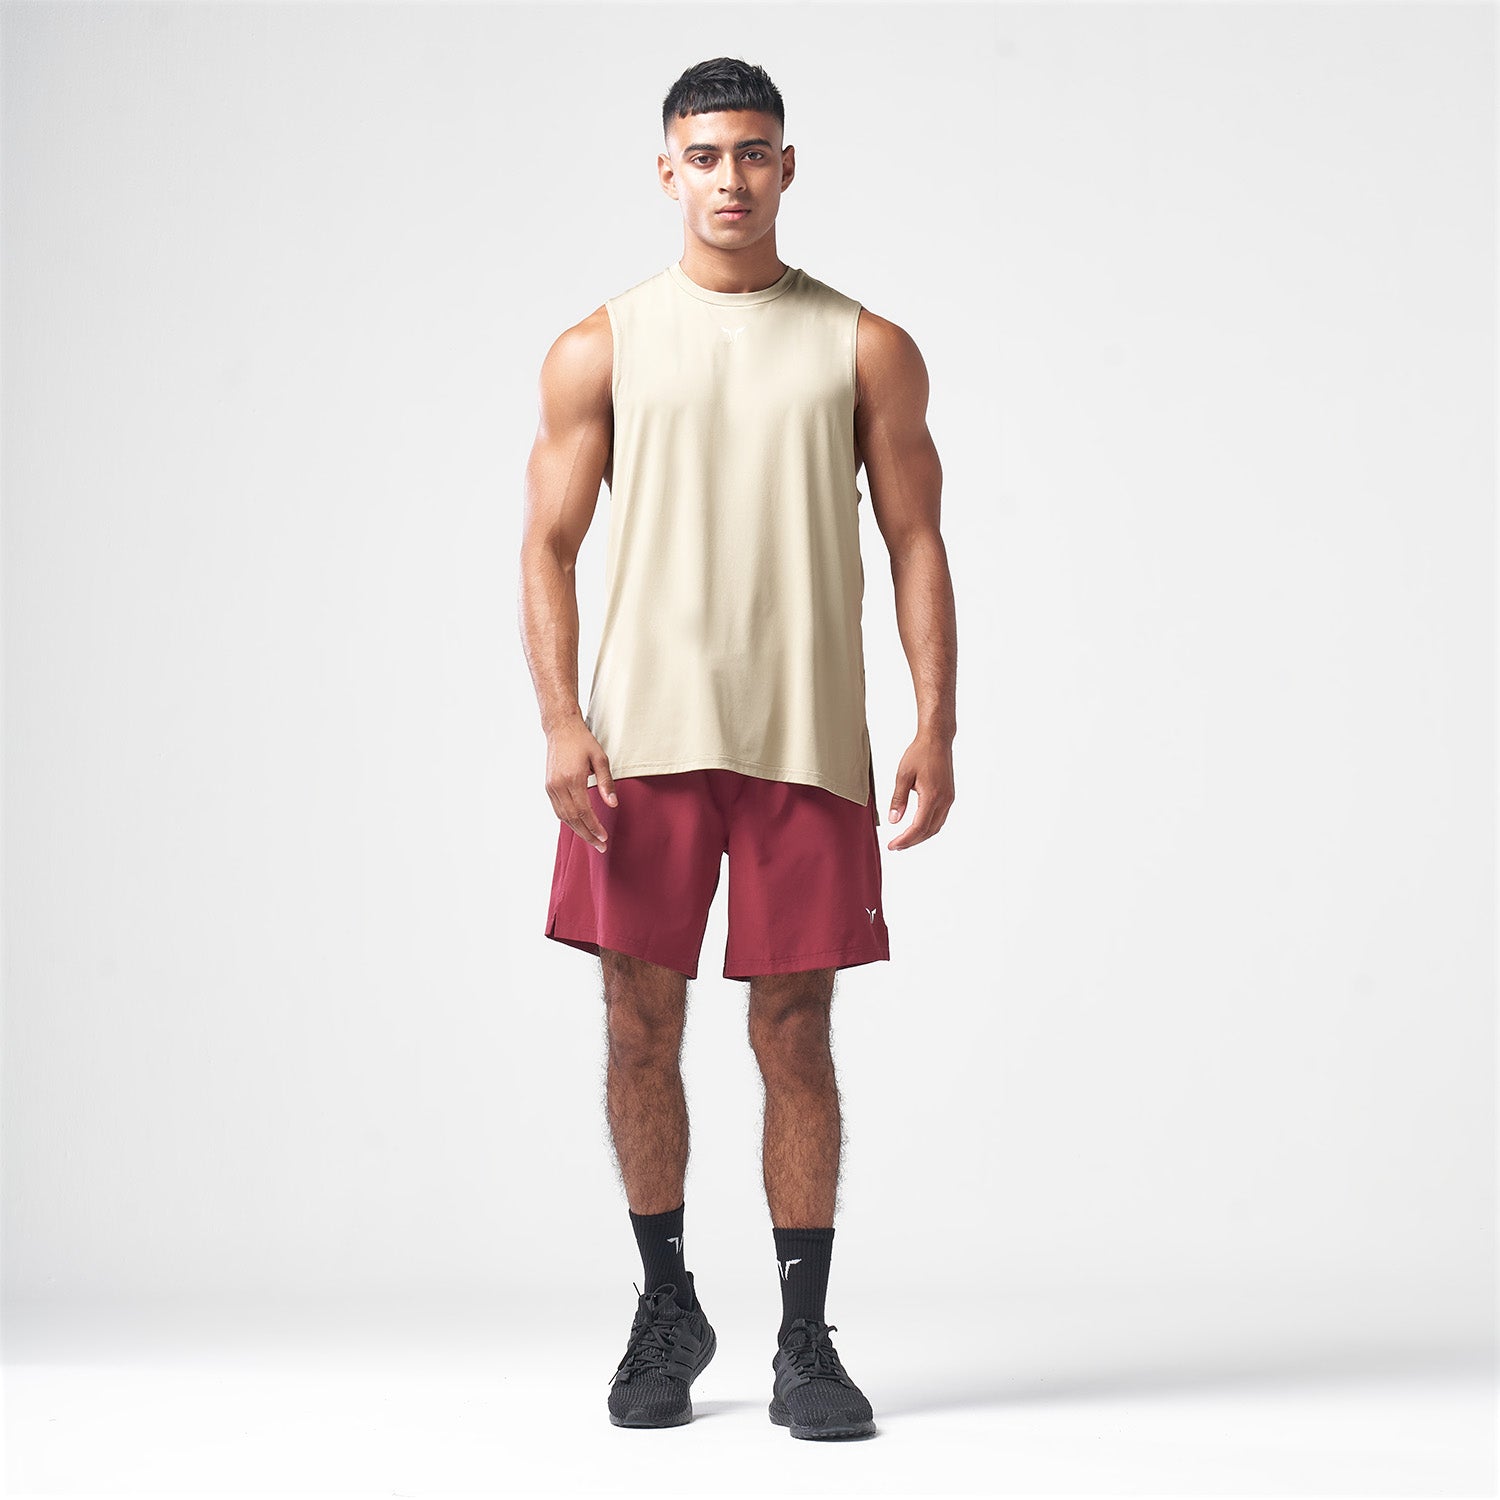 squatwolf-gym-wear-essential-gym-tank-sand-workout-tank-for-men